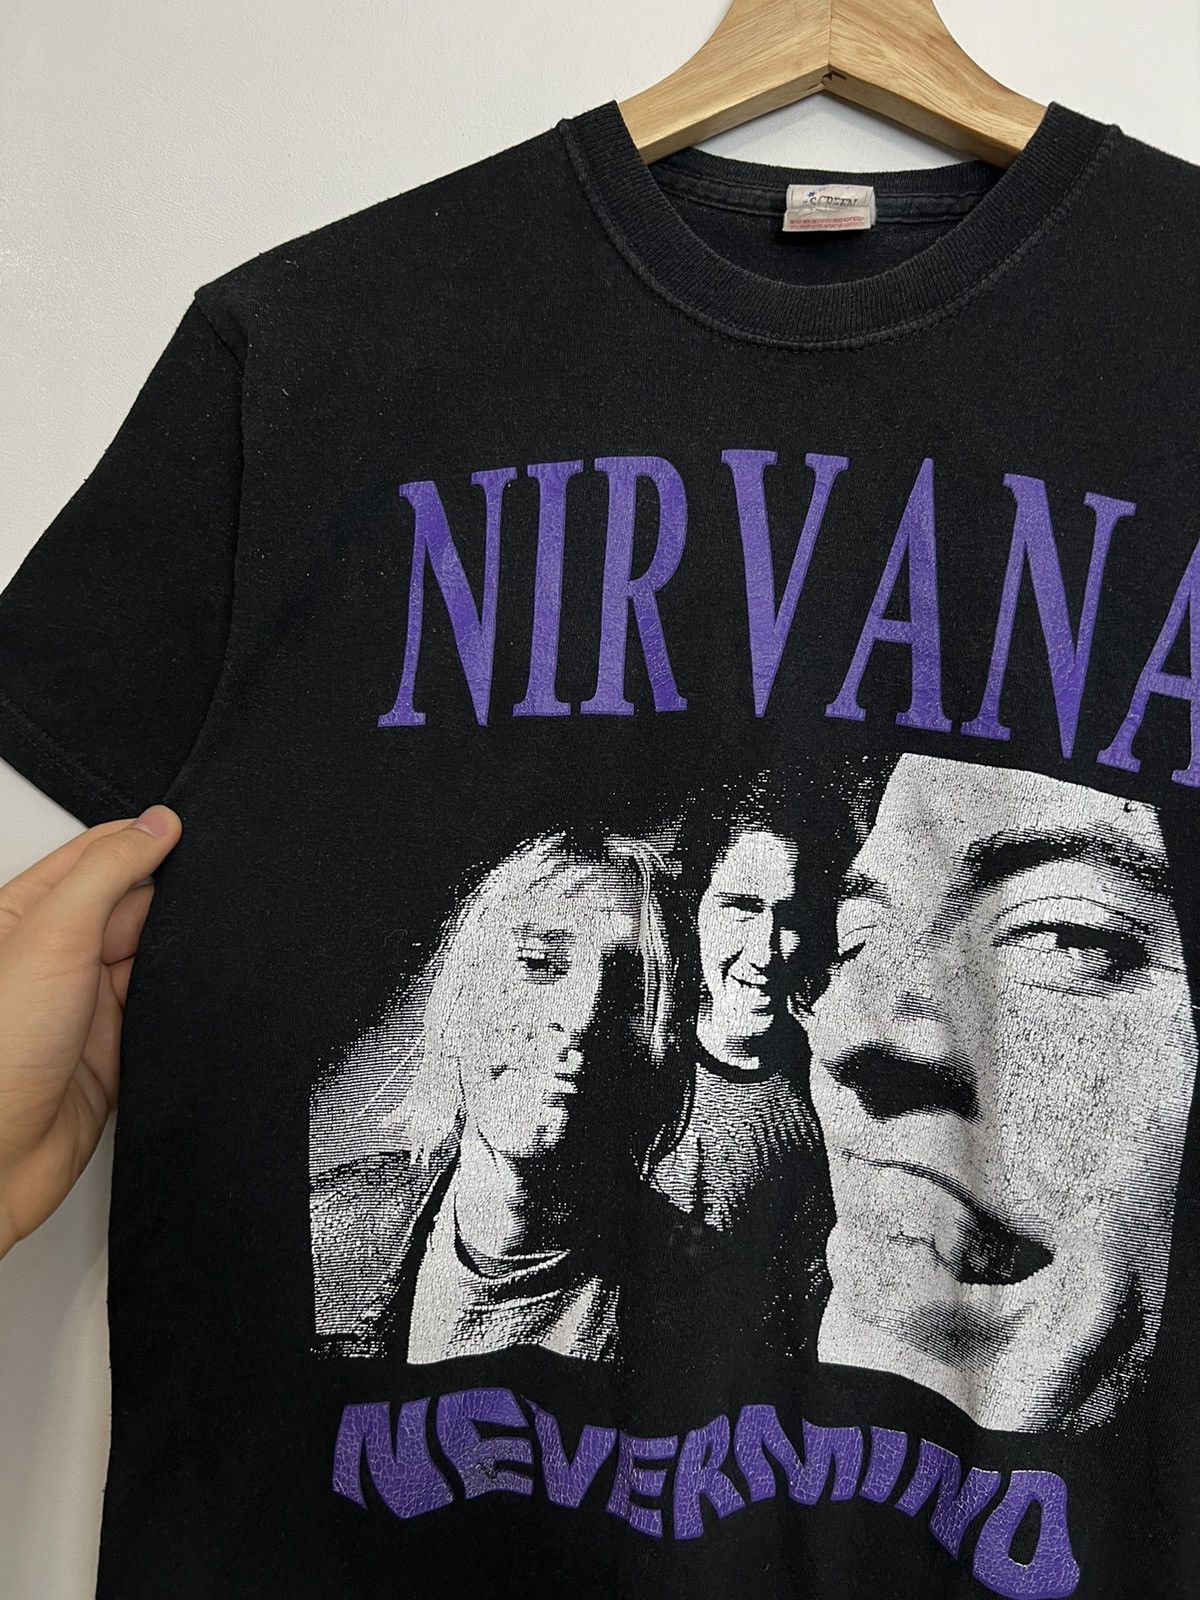 Vintage 90's Nirvana Nevermind Kurt Cobain Grunge Vintage T Shirt Size US S / EU 44-46 / 1 - 4 Preview